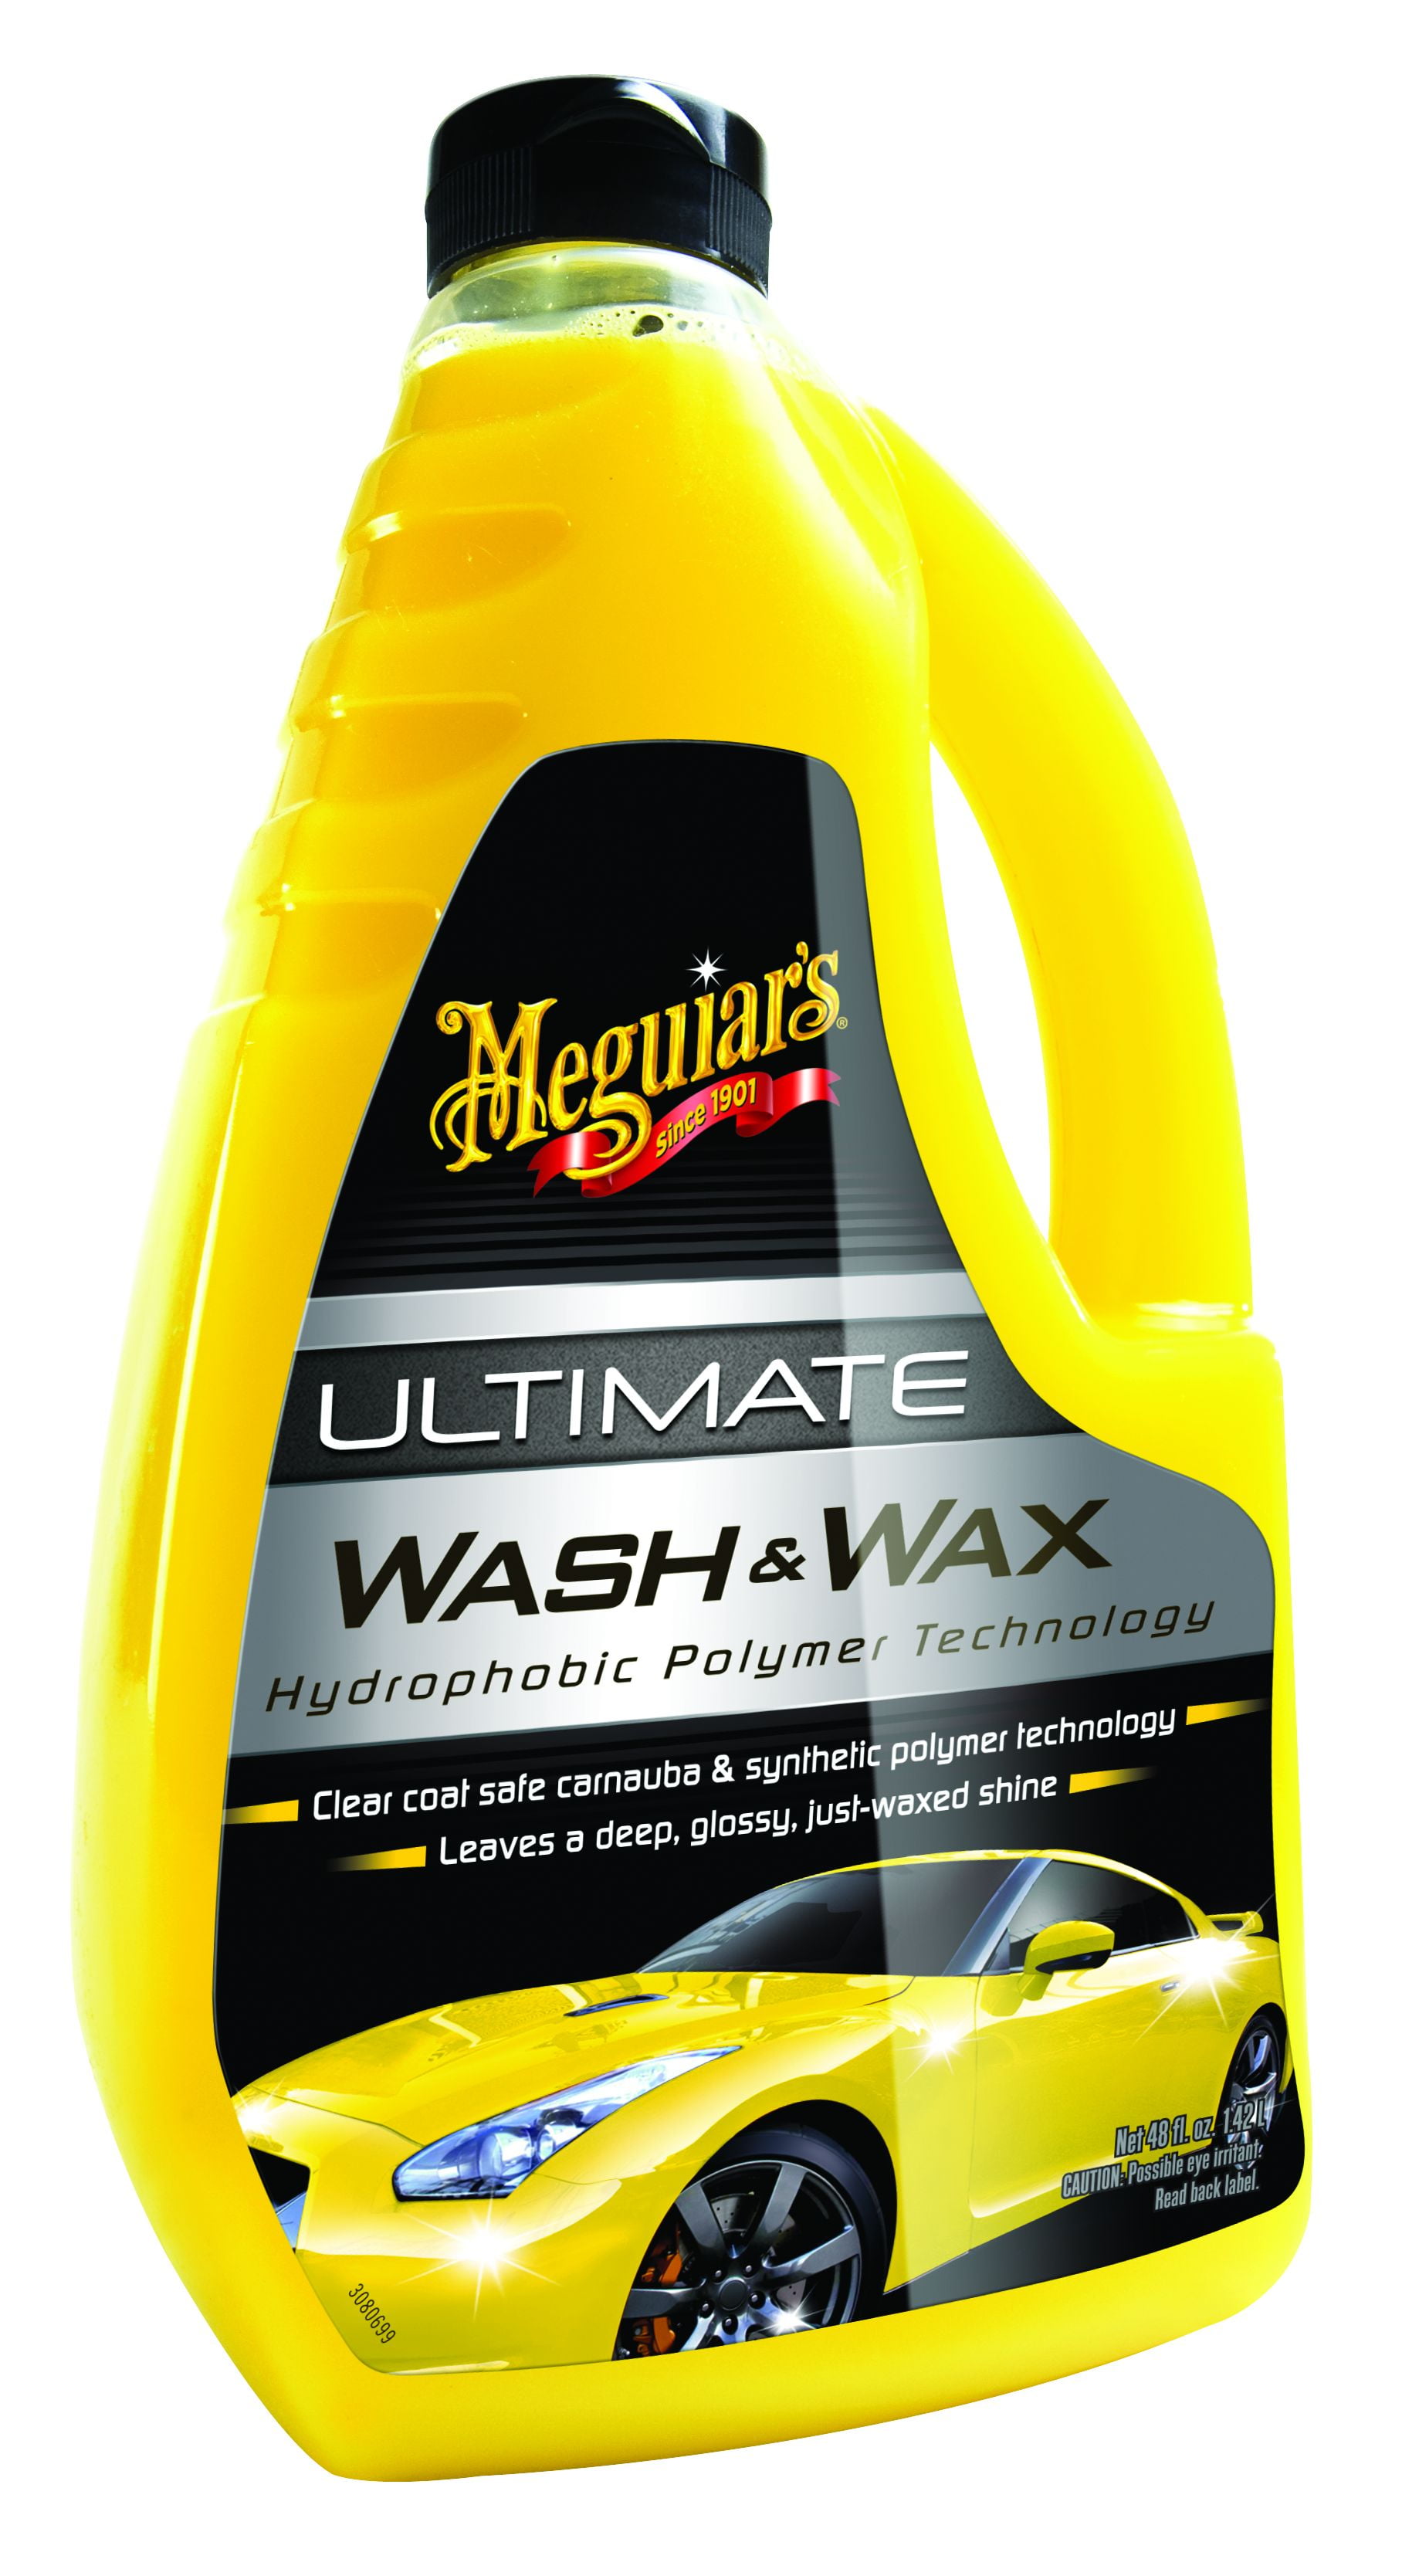 Shampooing ultime MEGUIAR'S Wash & Wax 1,4 L - Norauto